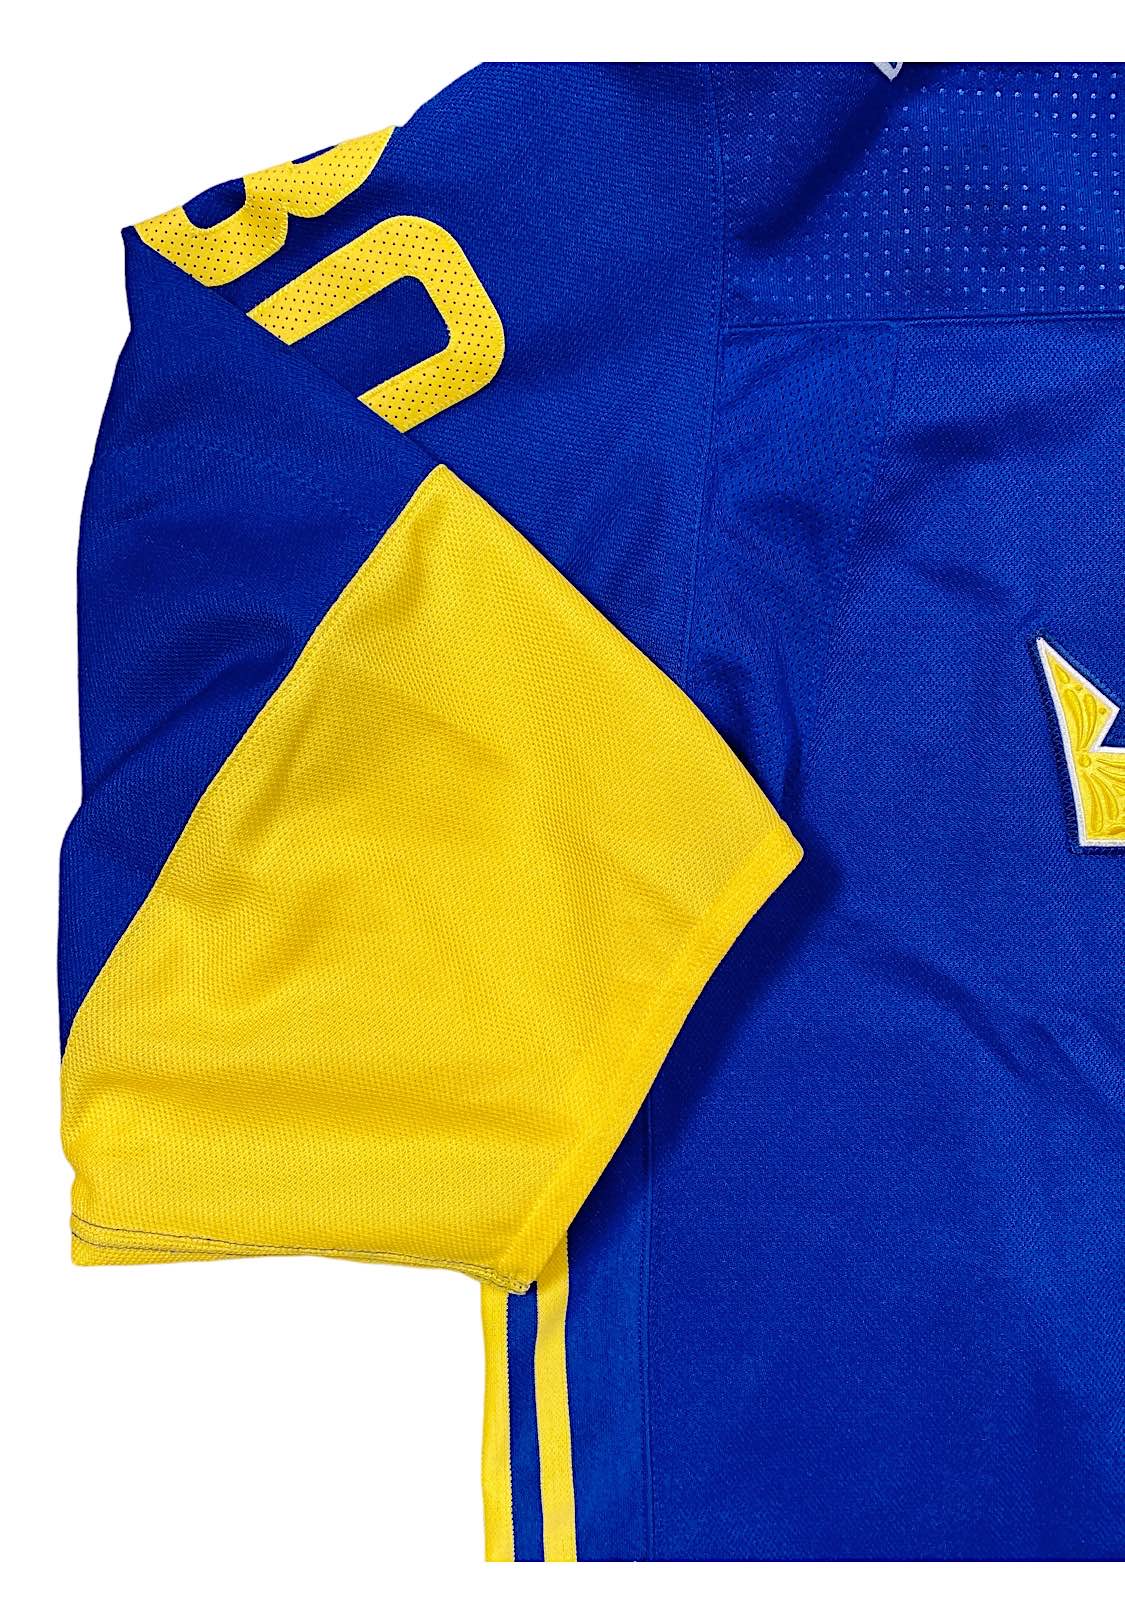  Rainbow Hawk Men's 2014 Henrik Lundqvist Team Sweden Olympic  Hockey Jersey Stitched : Sports & Outdoors